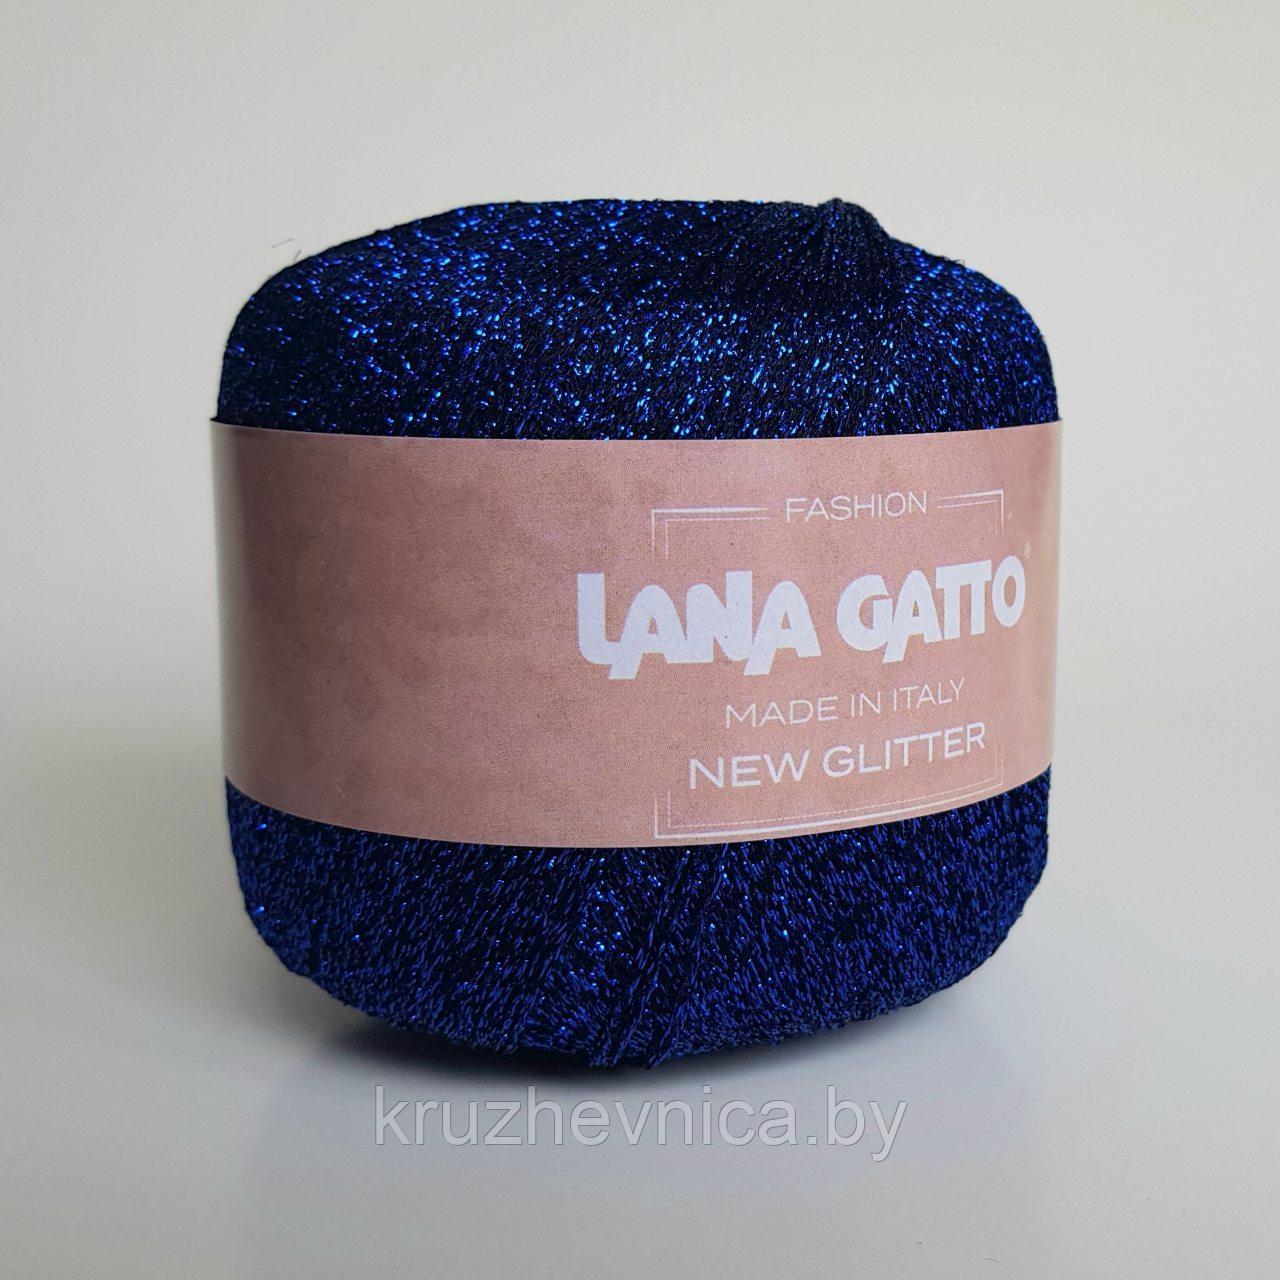 Пряжа Lana Gatto New Glitter (51% полиэстер, 49% полиамид), 25г/300 м, цвет 8589 blu